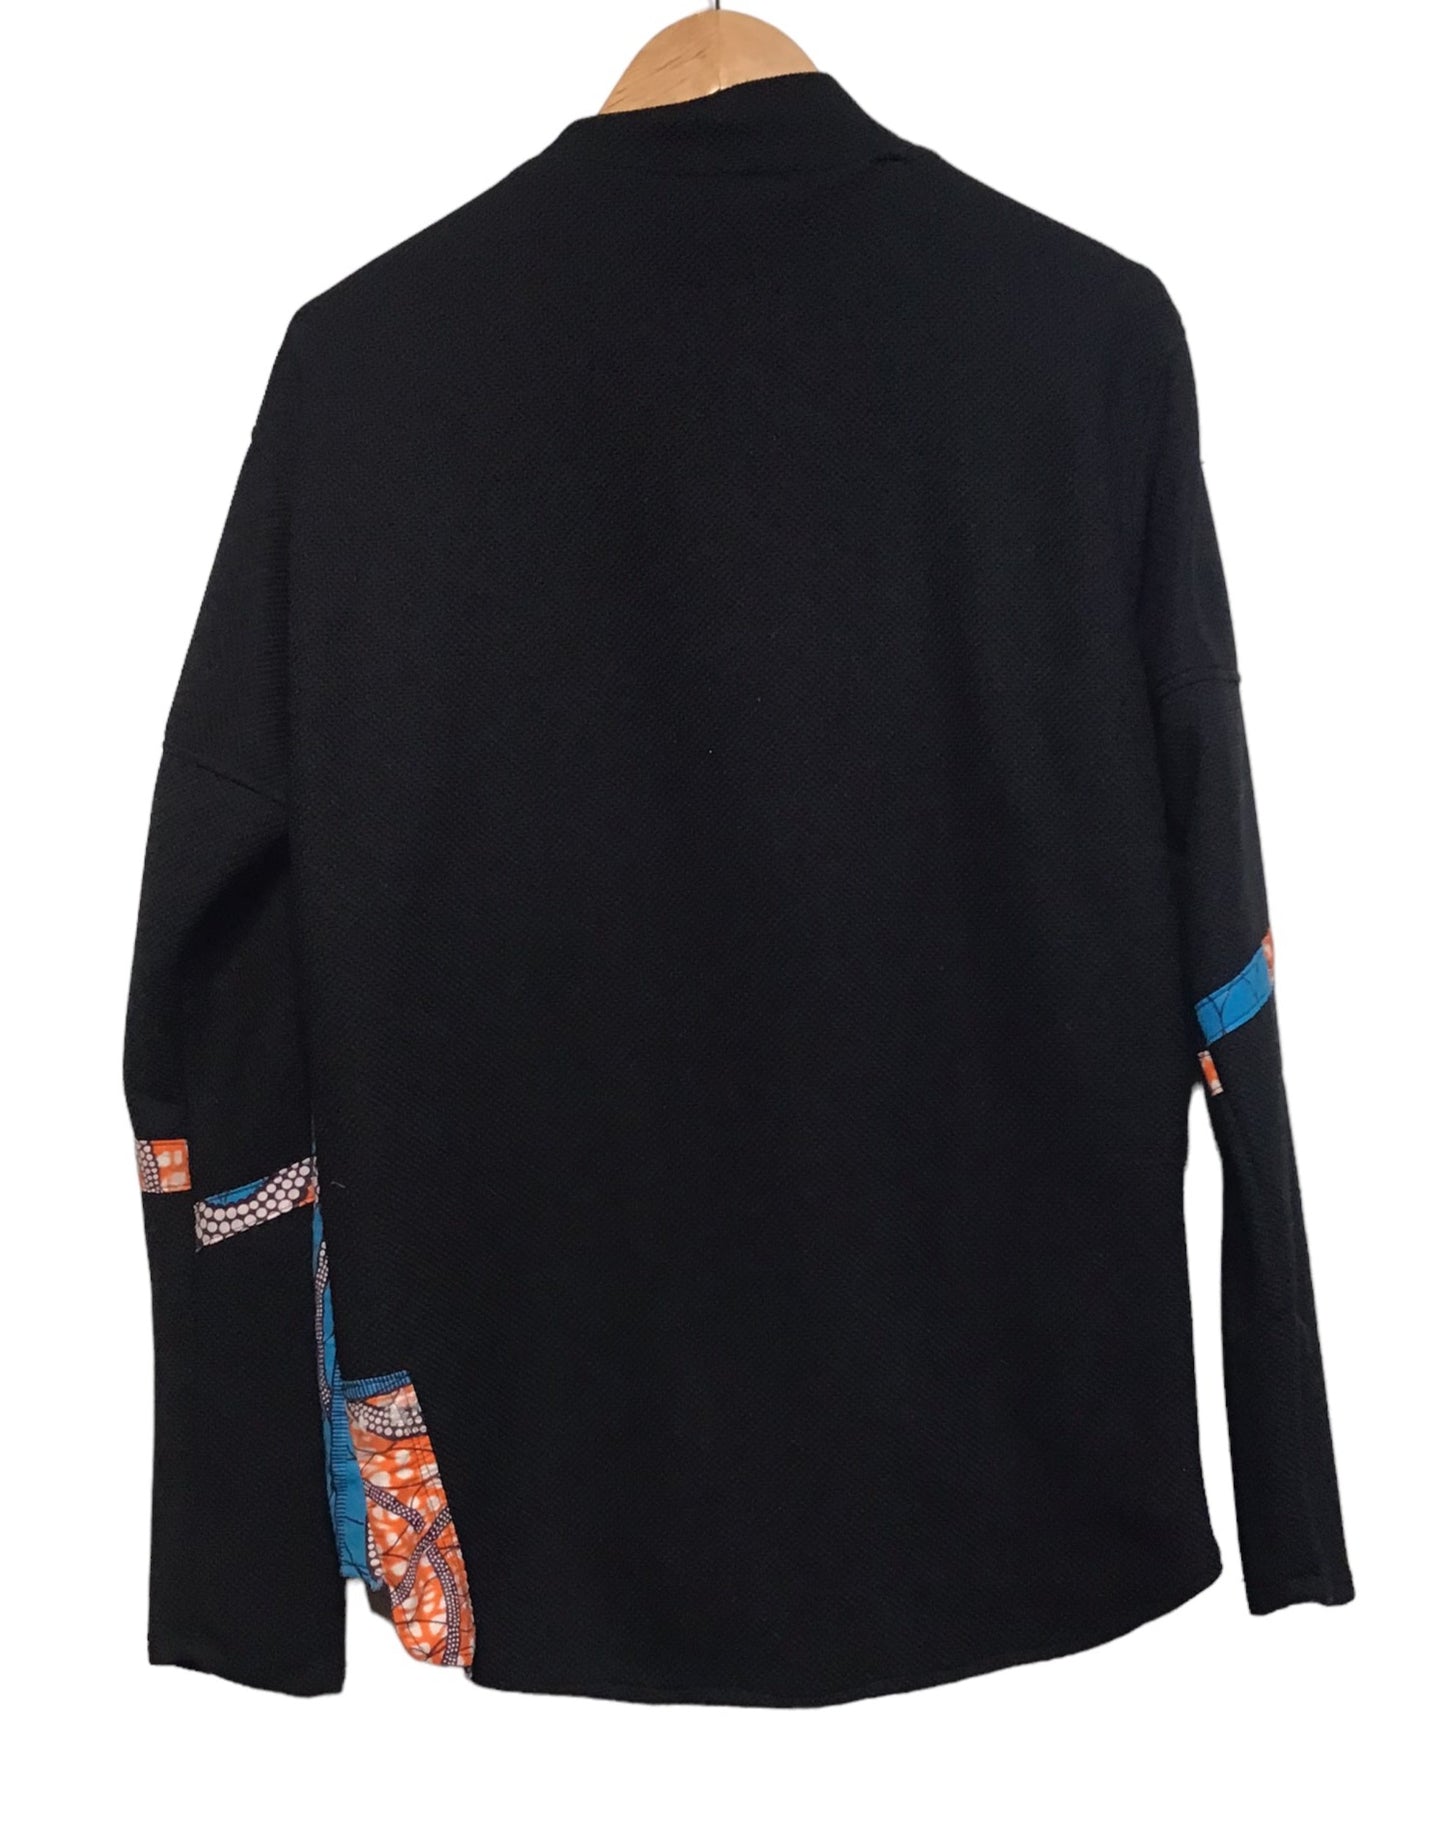 Black Patterned Sweatshirt (Size M)